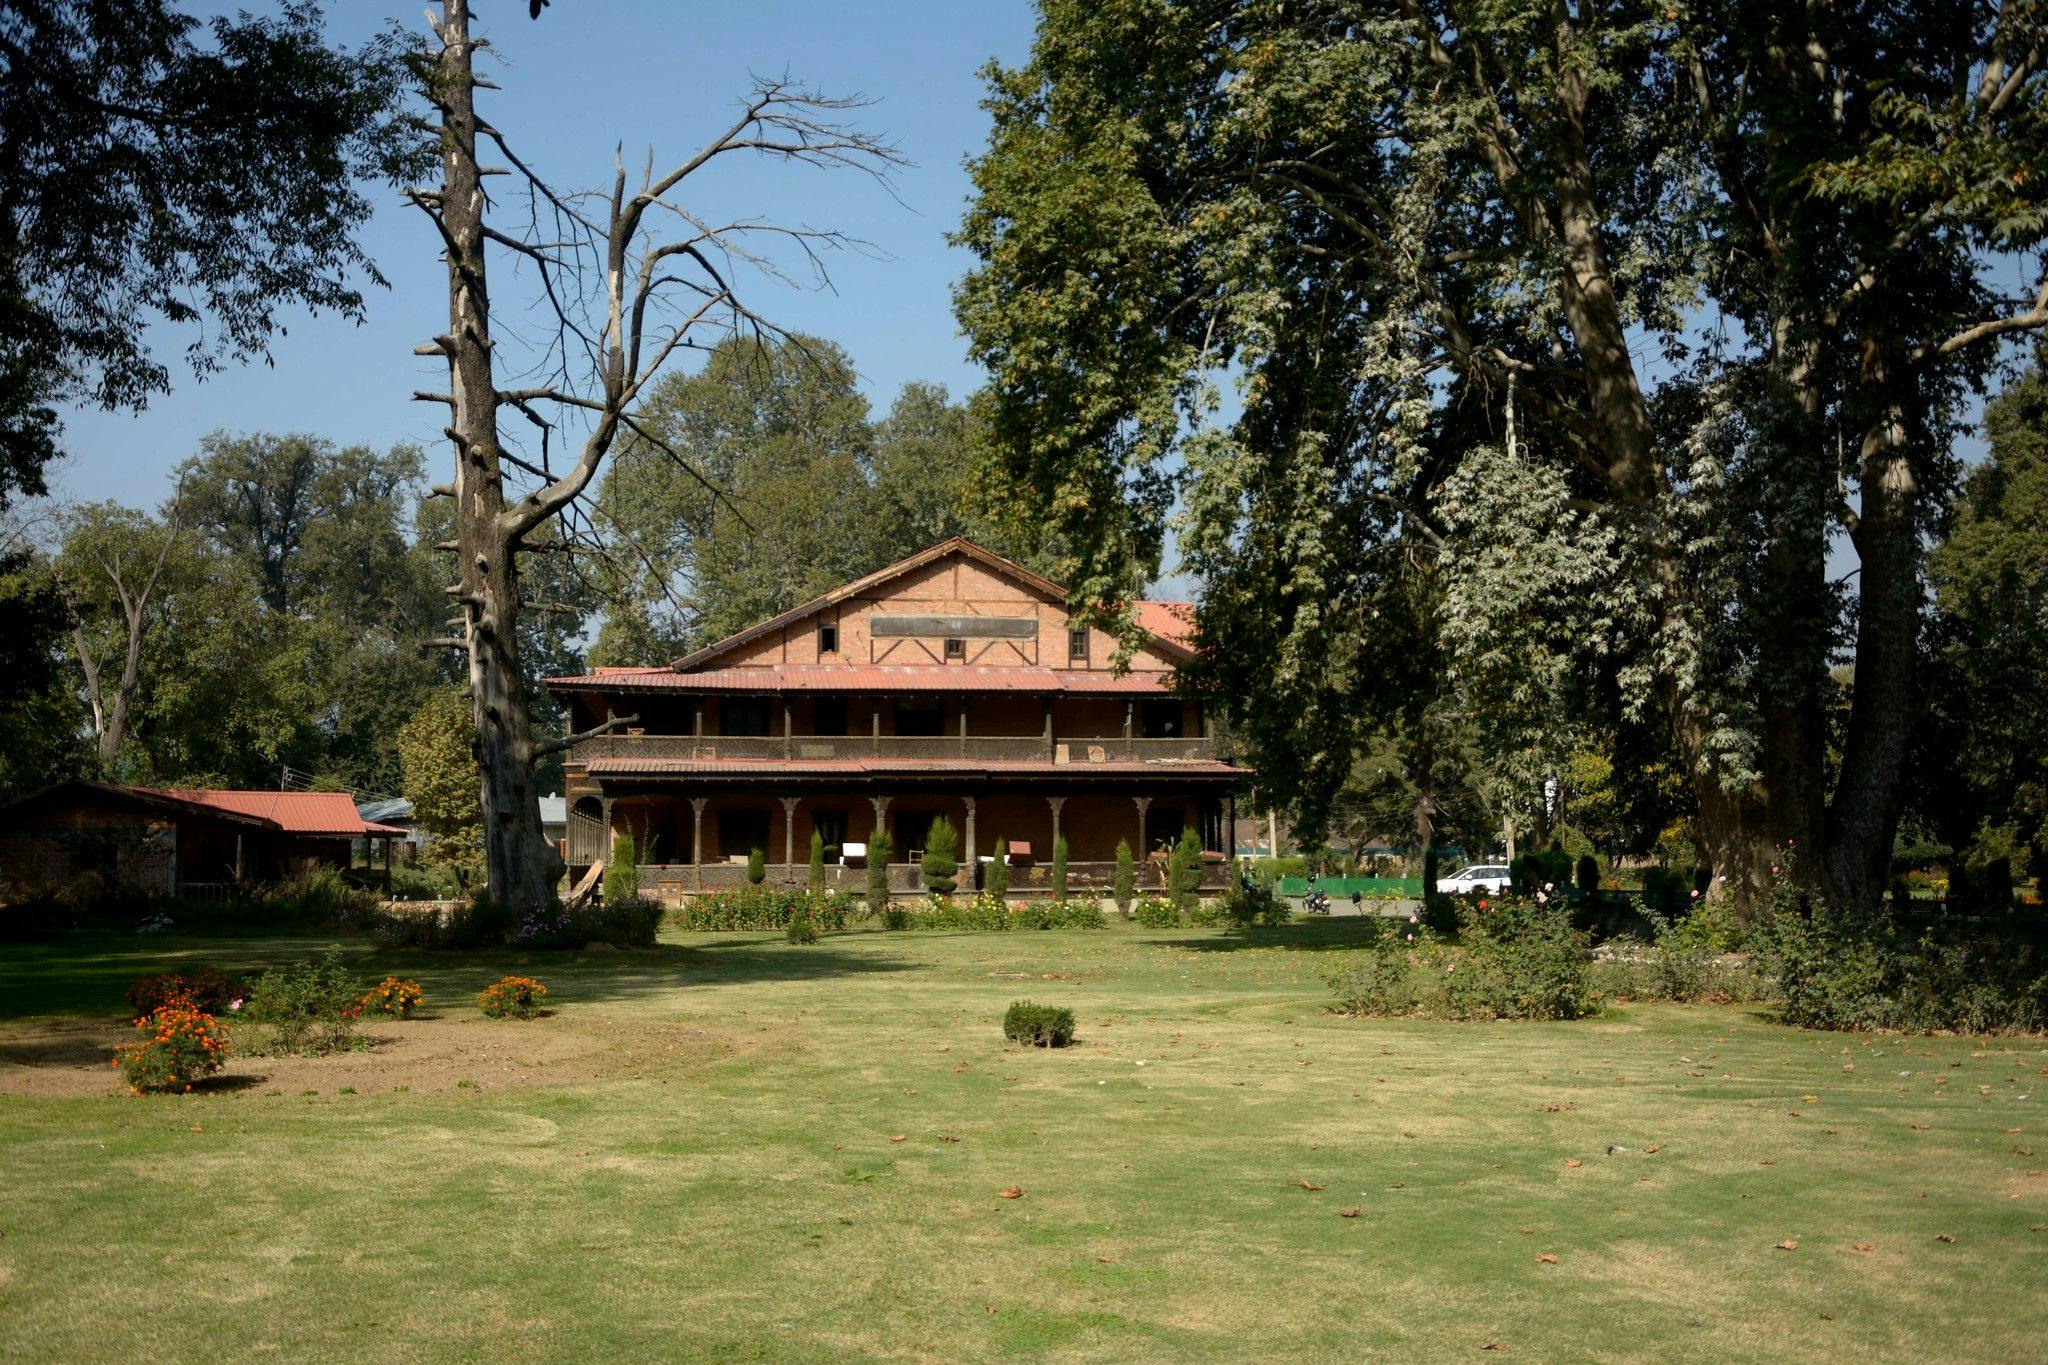 The old British Residency building in Srinagar